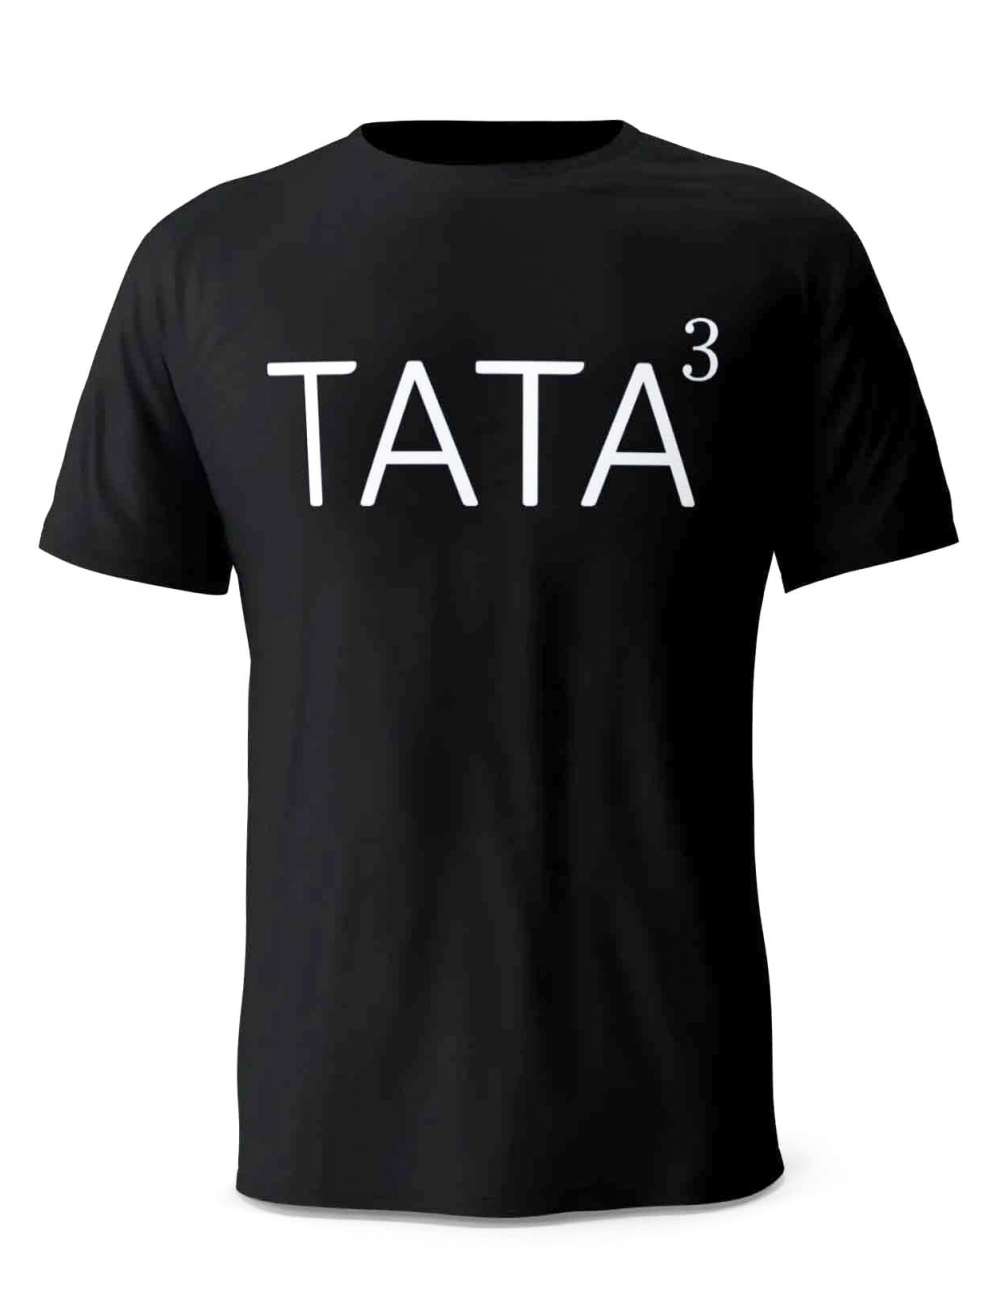 Koszulka Tata 3, T-shirt Dla Taty